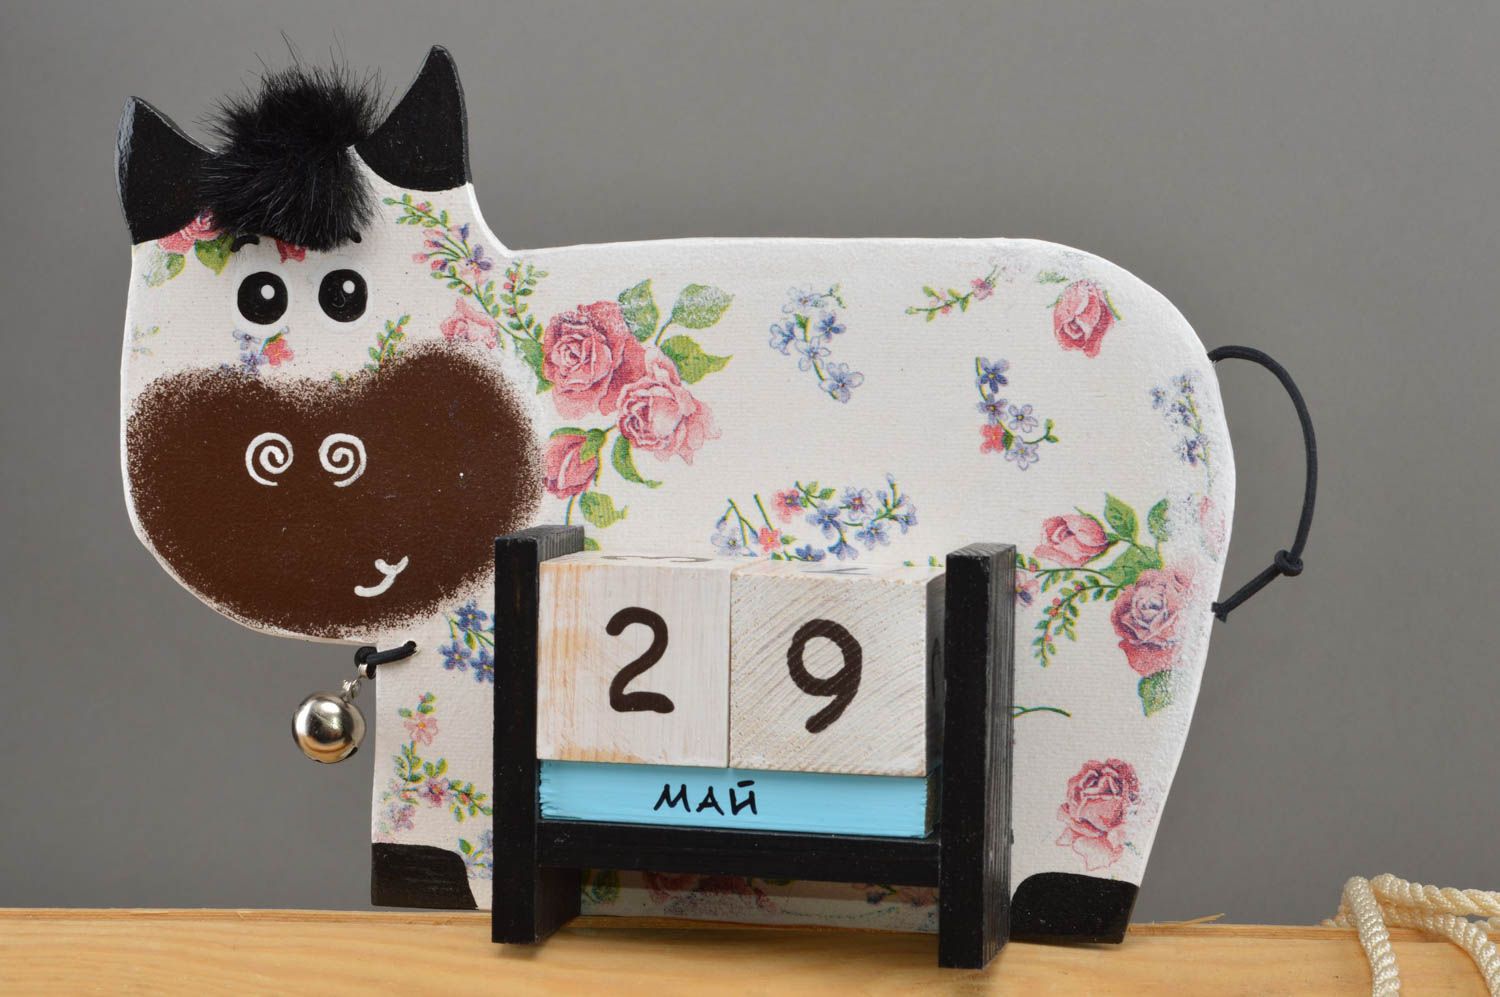 Handmade calendar for kids unusual cow figurine stylish table decor ideas photo 2